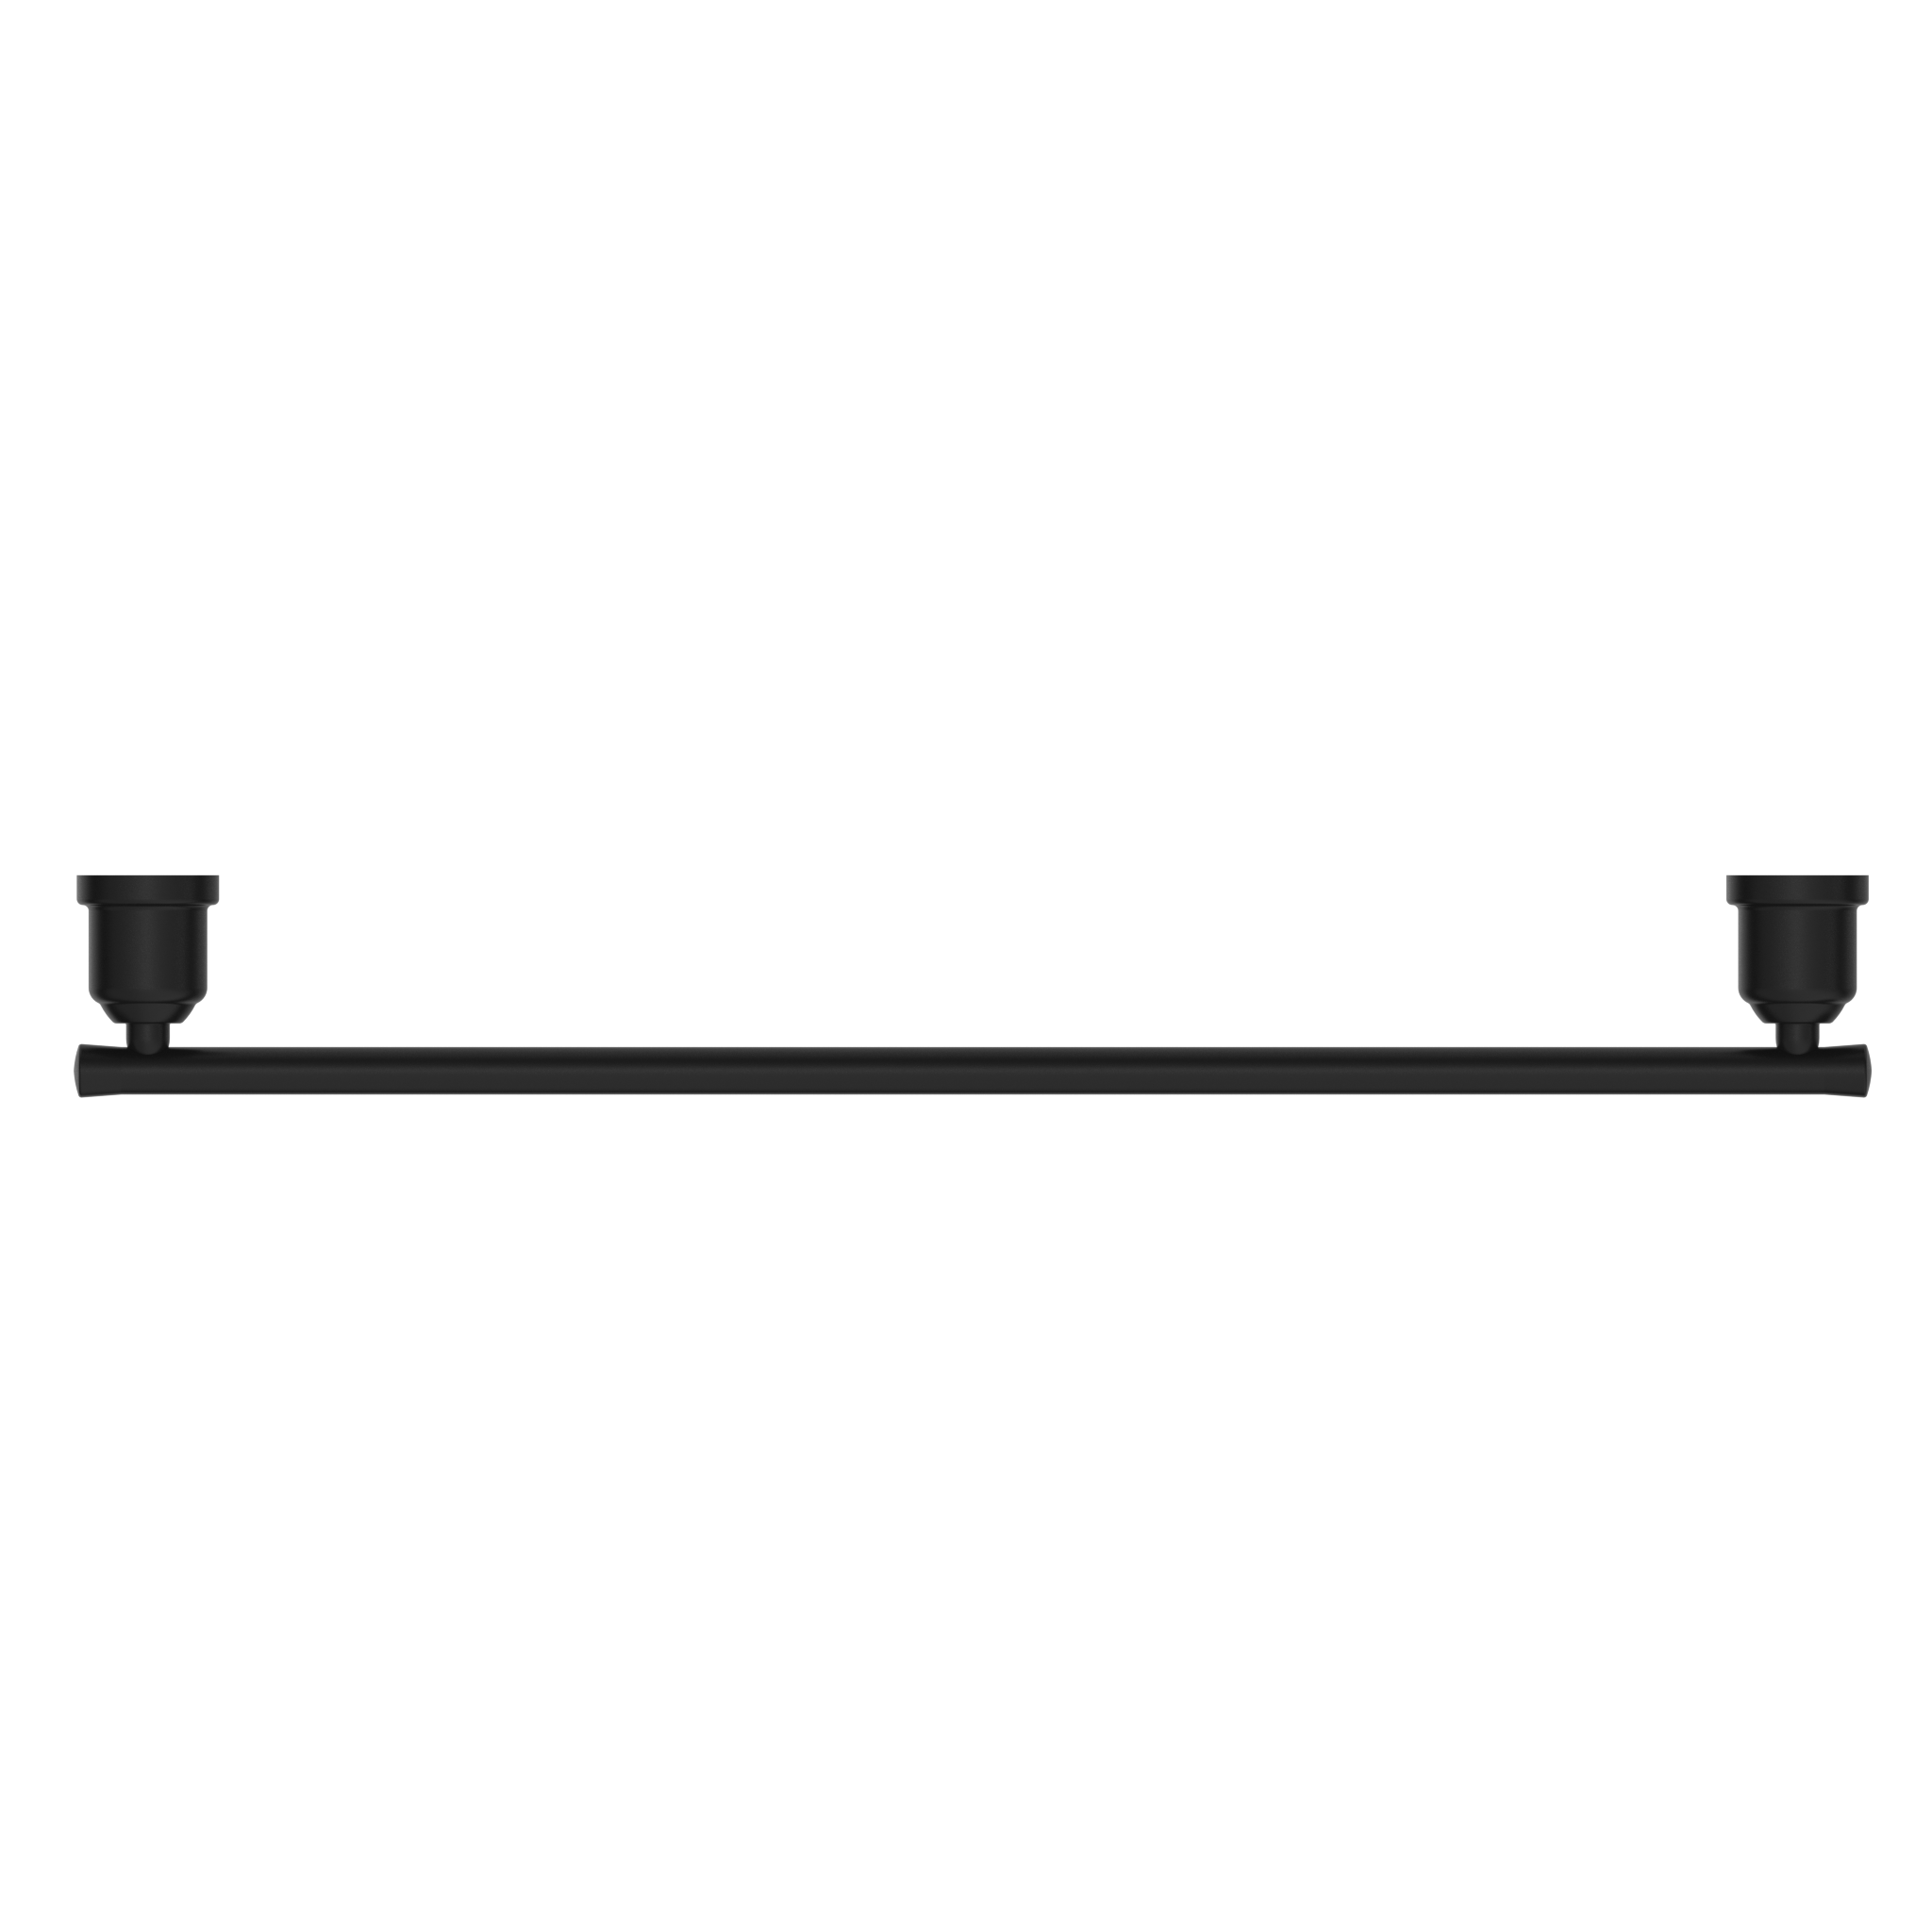 NERO YORK NON-HEATED SINGLE TOWEL RAIL 600MM MATTE BLACK